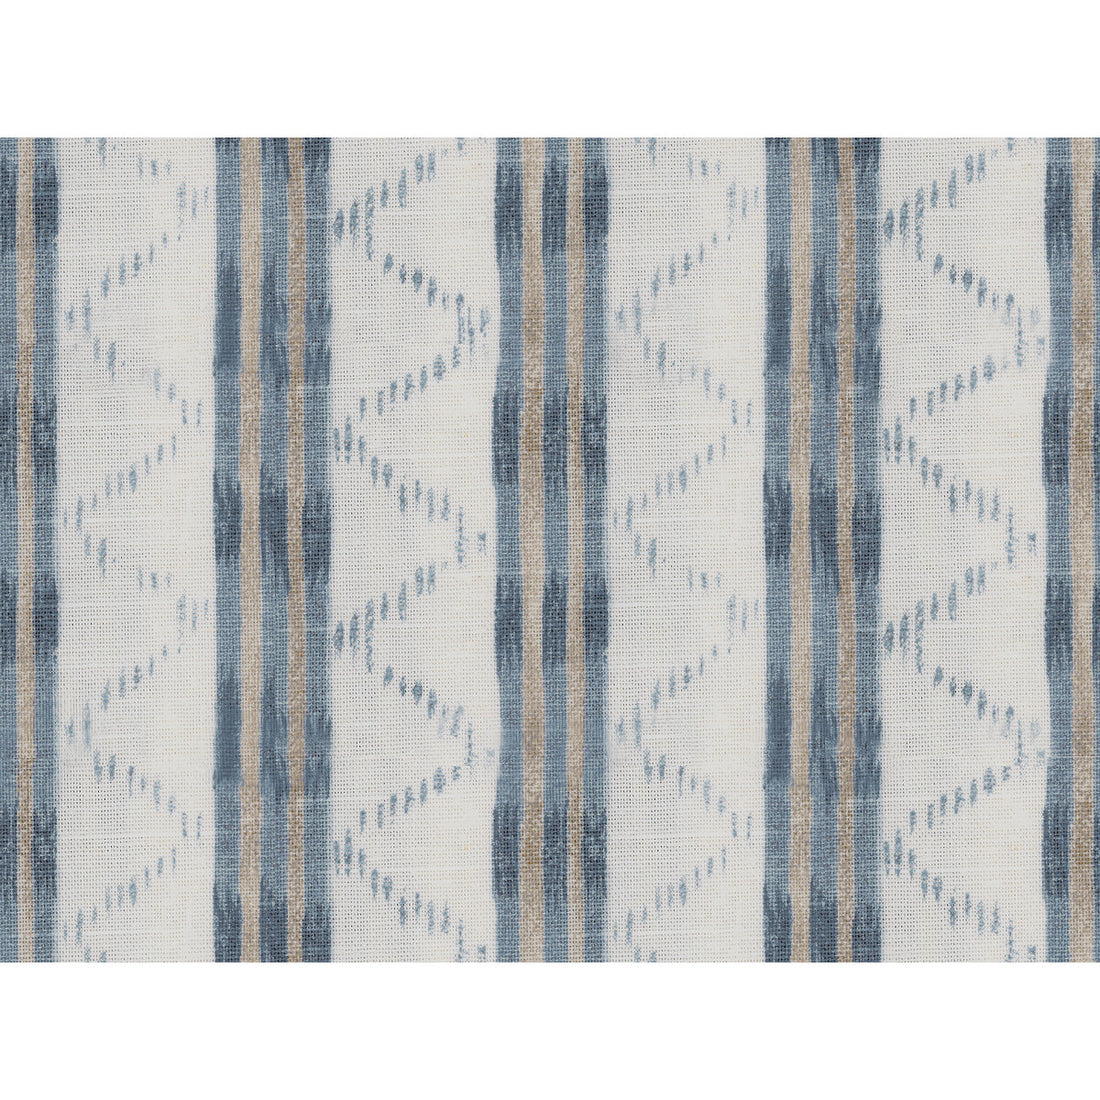 Makassar fabric in blue color - pattern 2017106.5.0 - by Lee Jofa in the Oscar De La Renta III collection